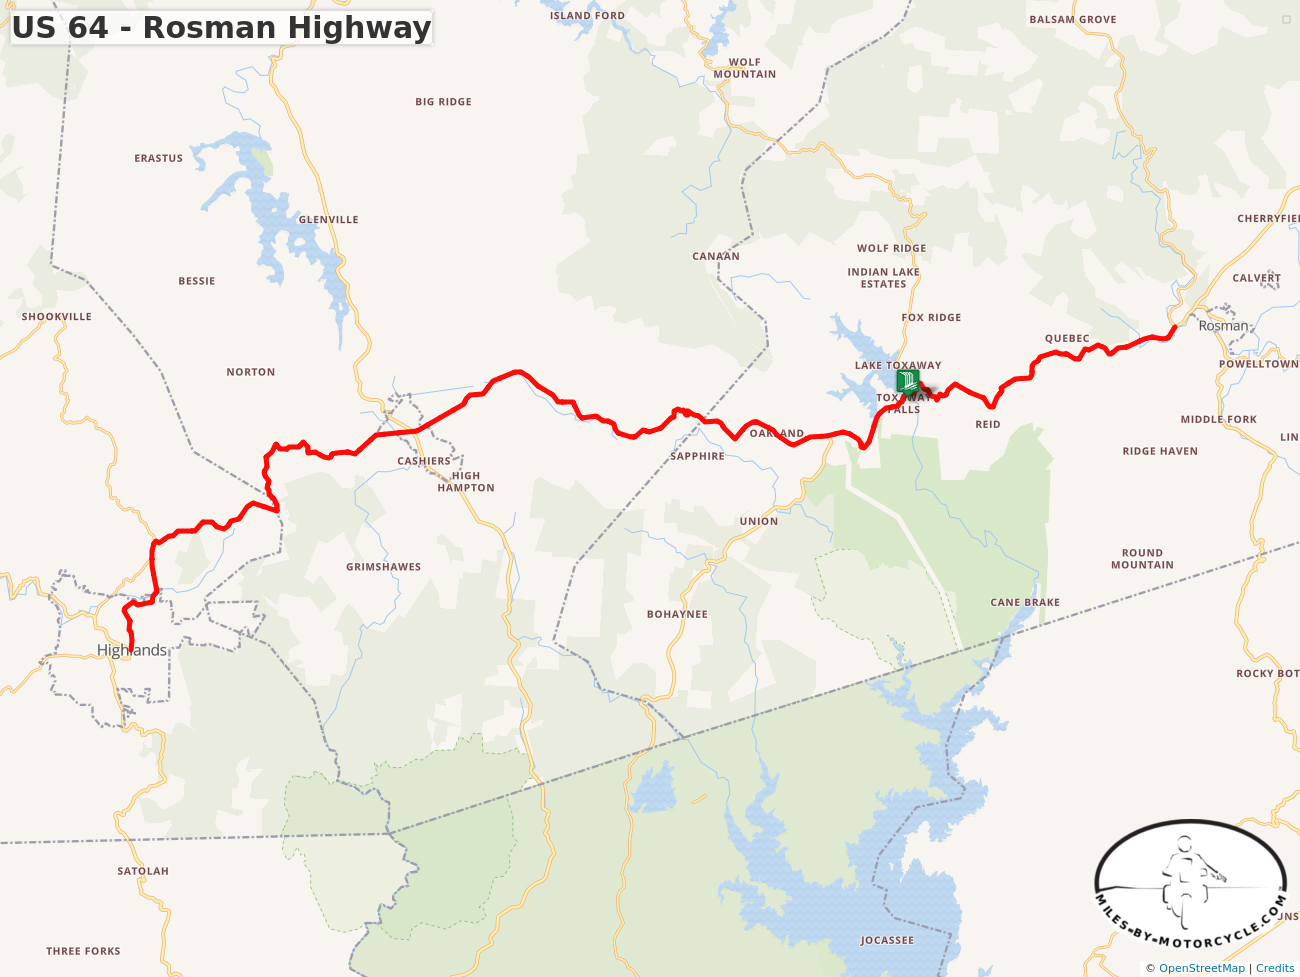 US 64 - Rosman Highway